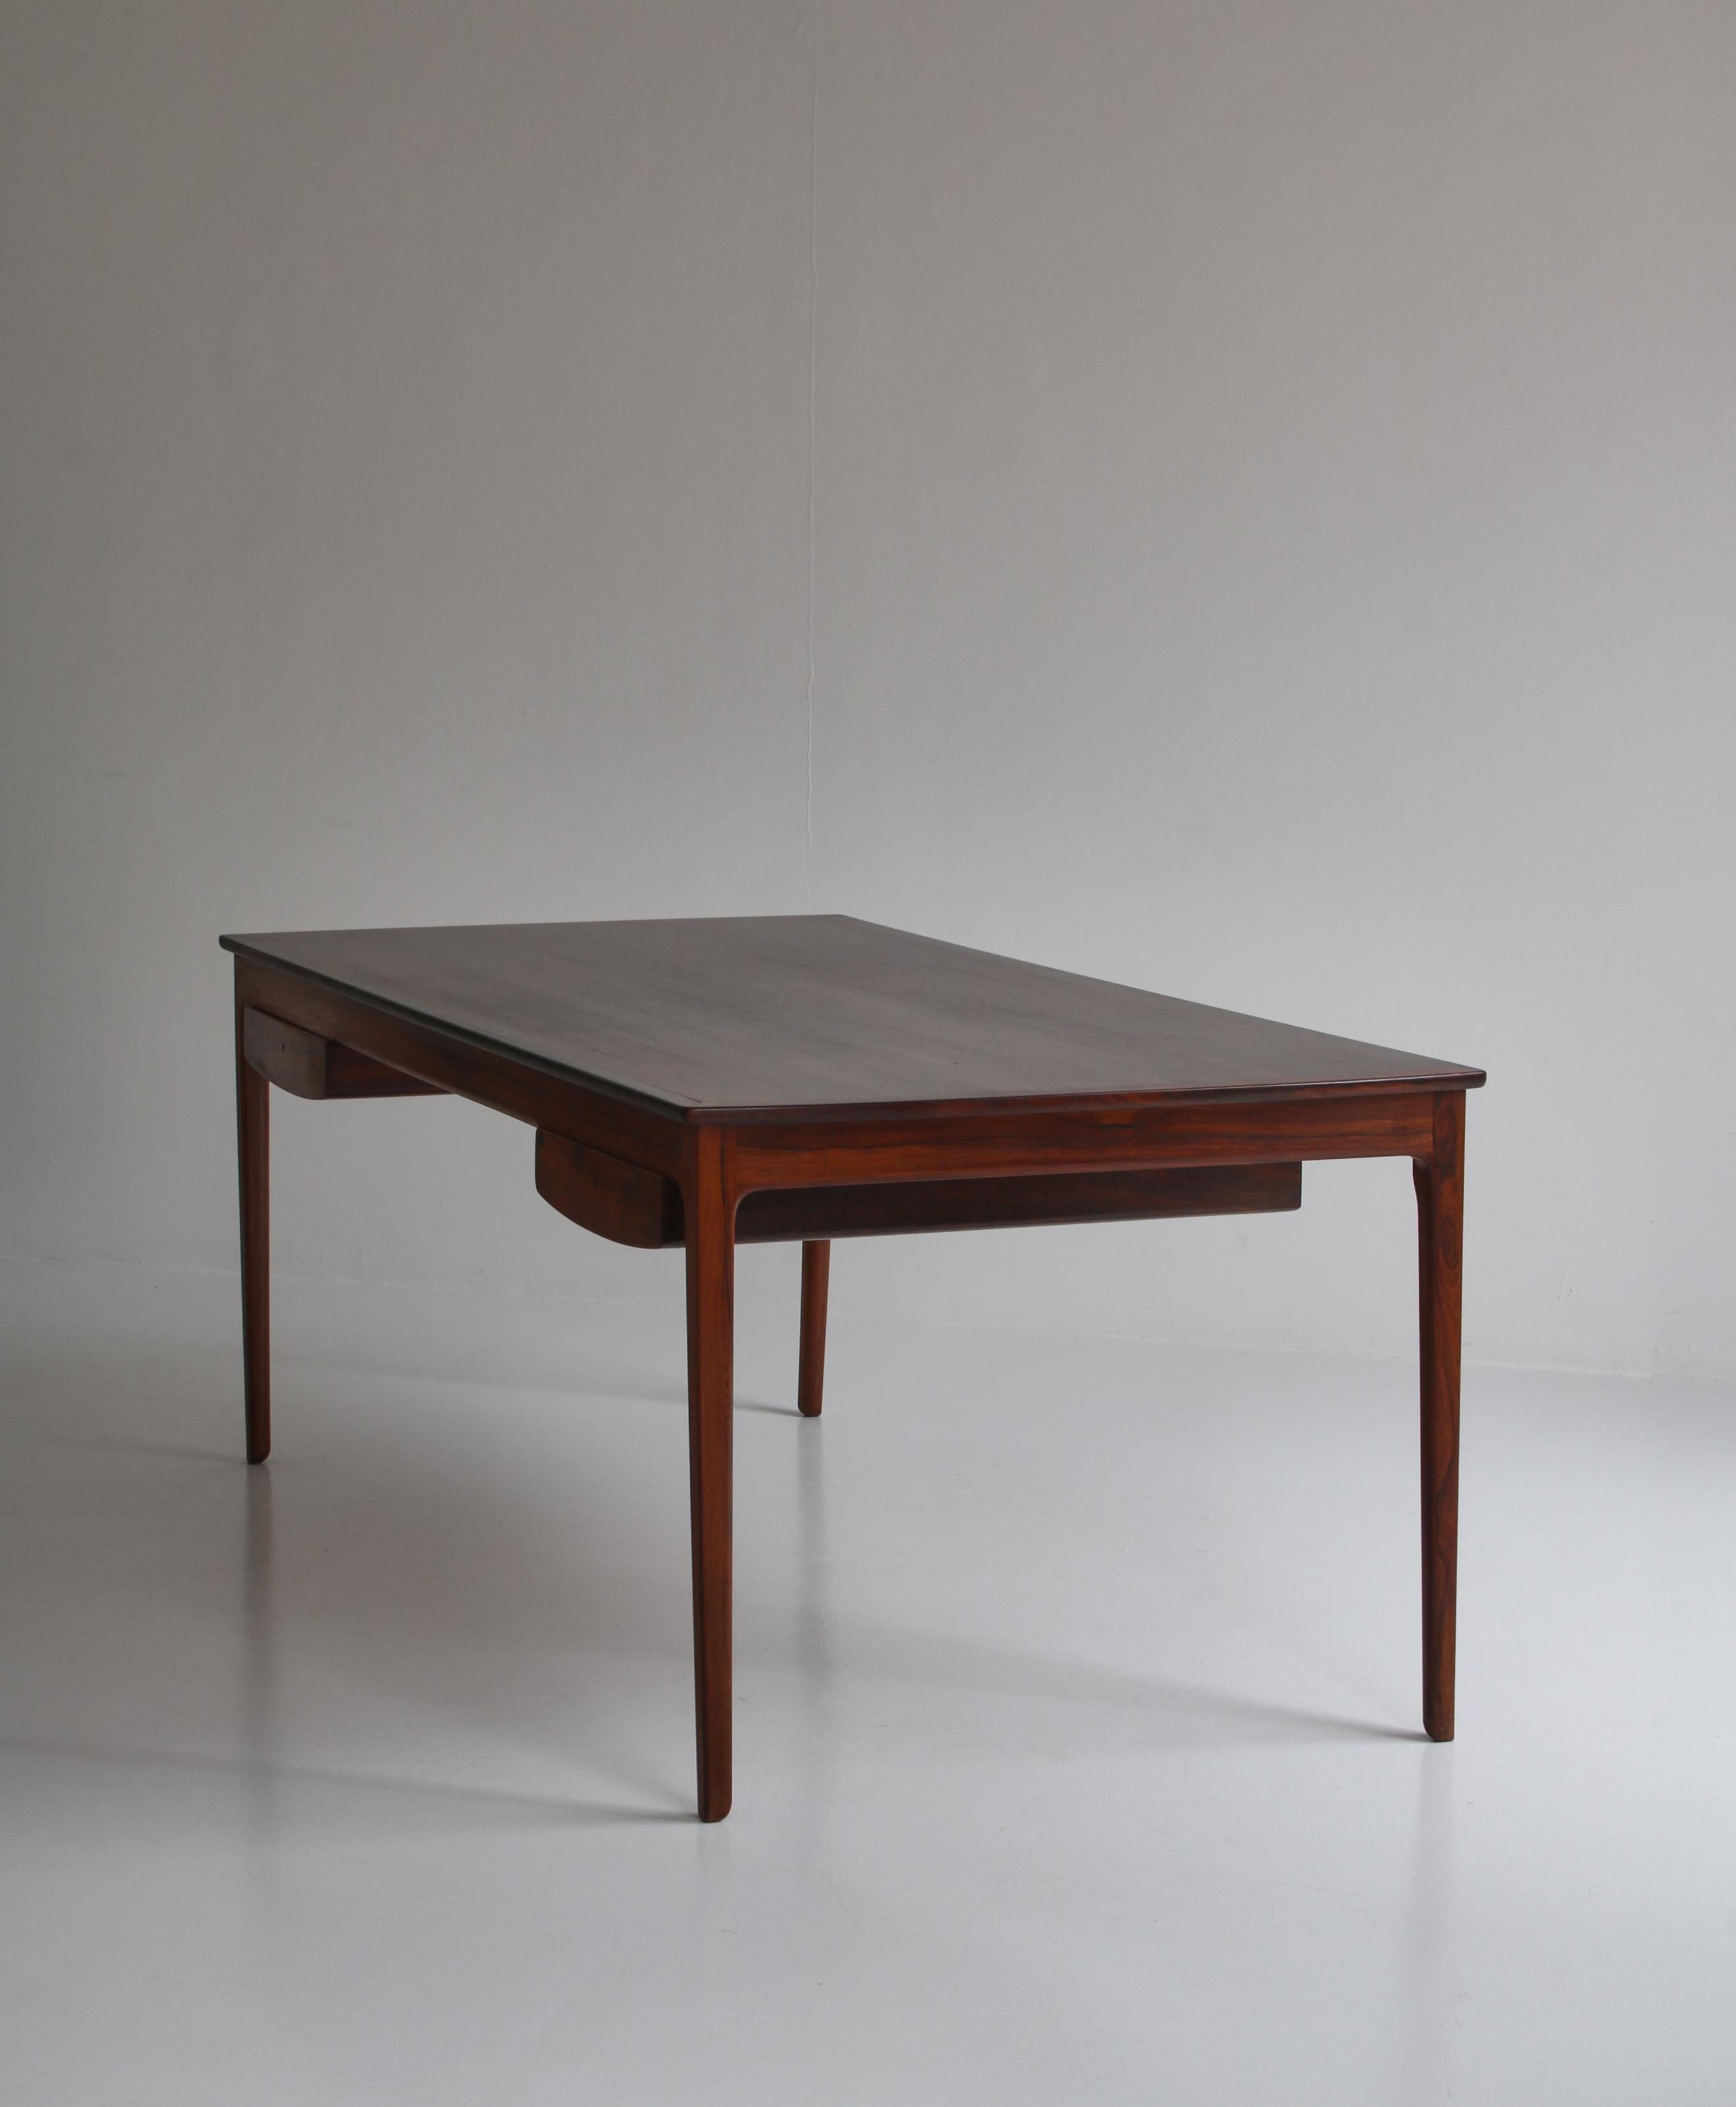 Ole Wanscher Freestanding Desk in Rosewood Made by A.J. Iversen, Copenhagen 1959 For Sale 12